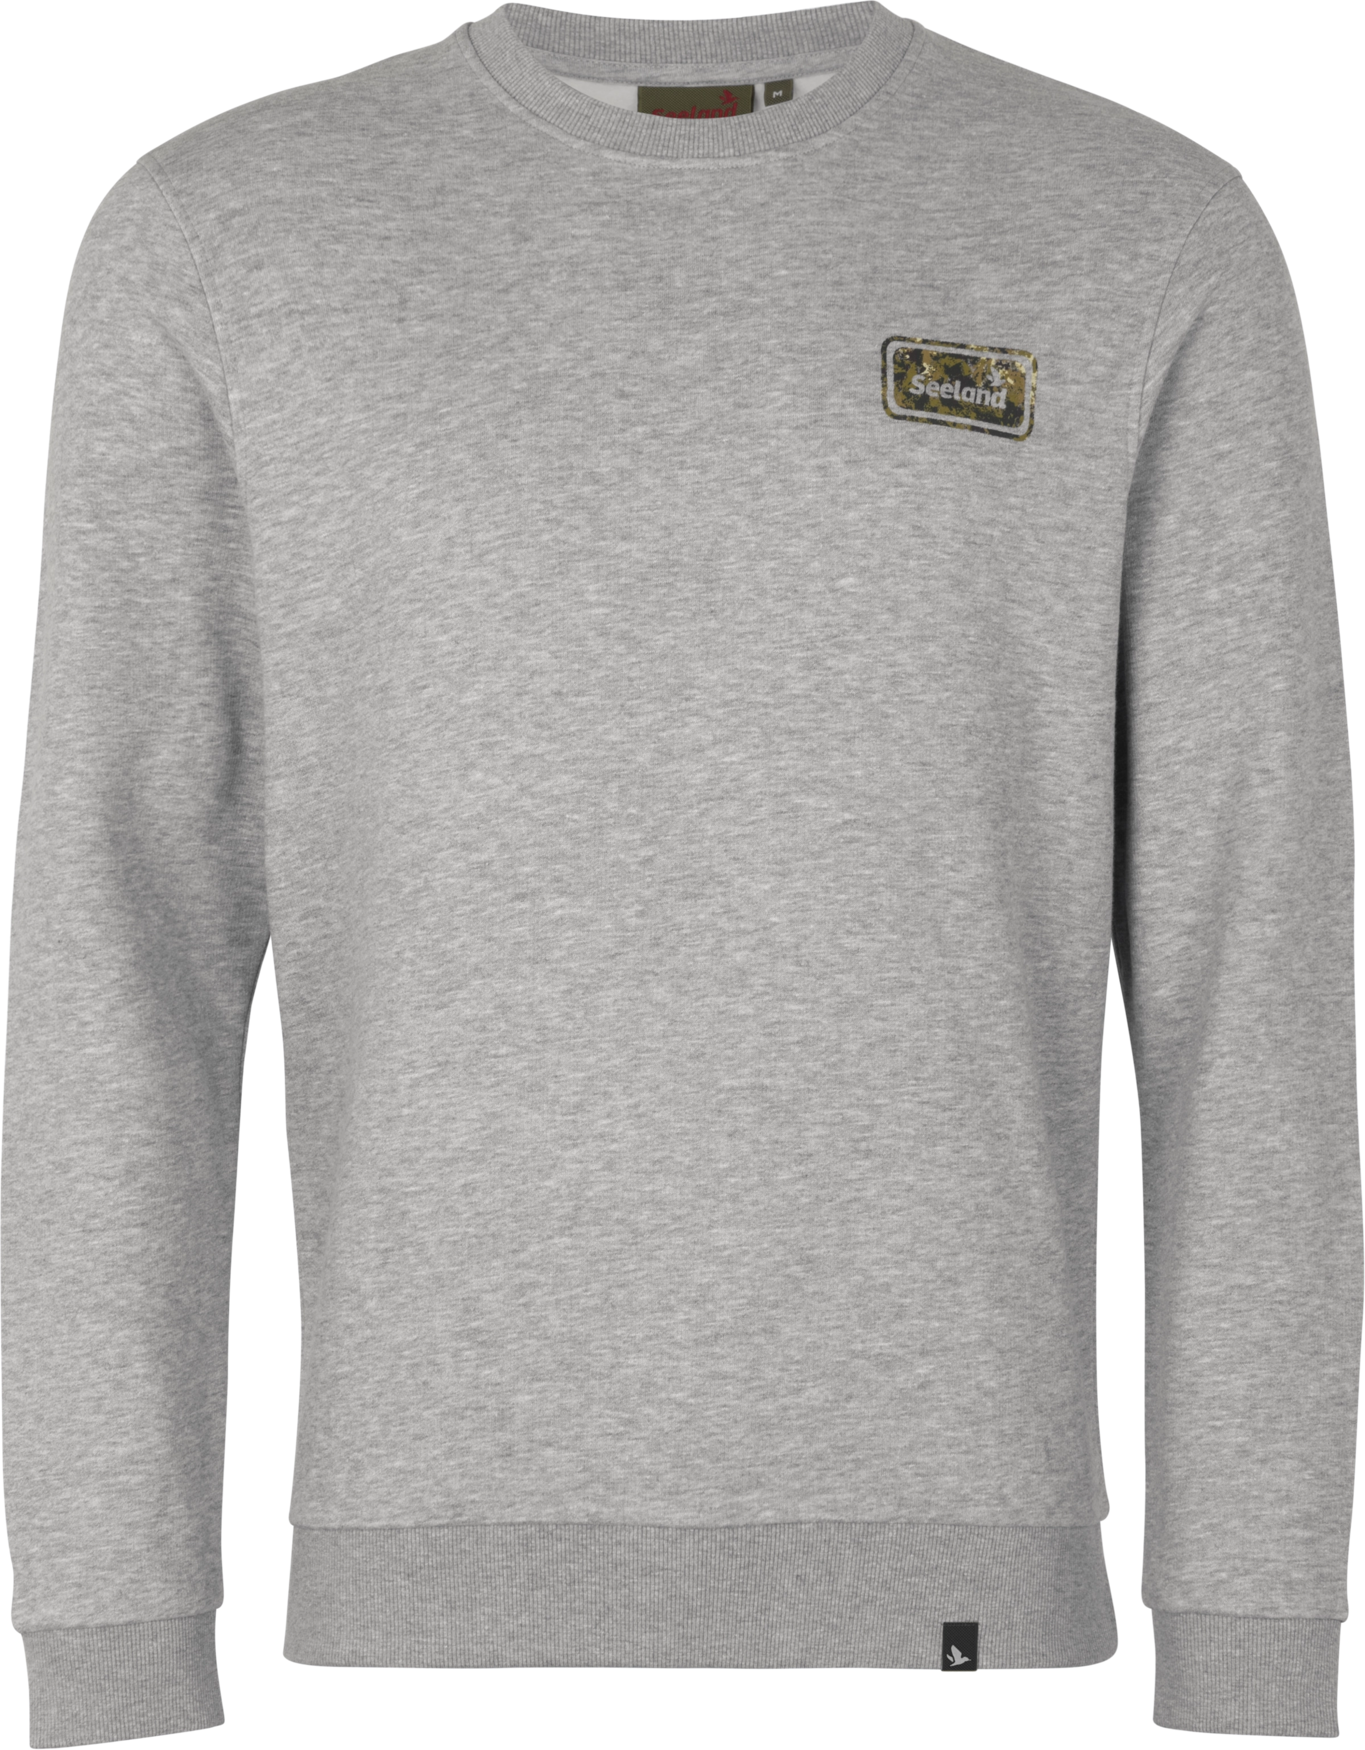 Bluza Cryo sweatshirt - uniwersalna